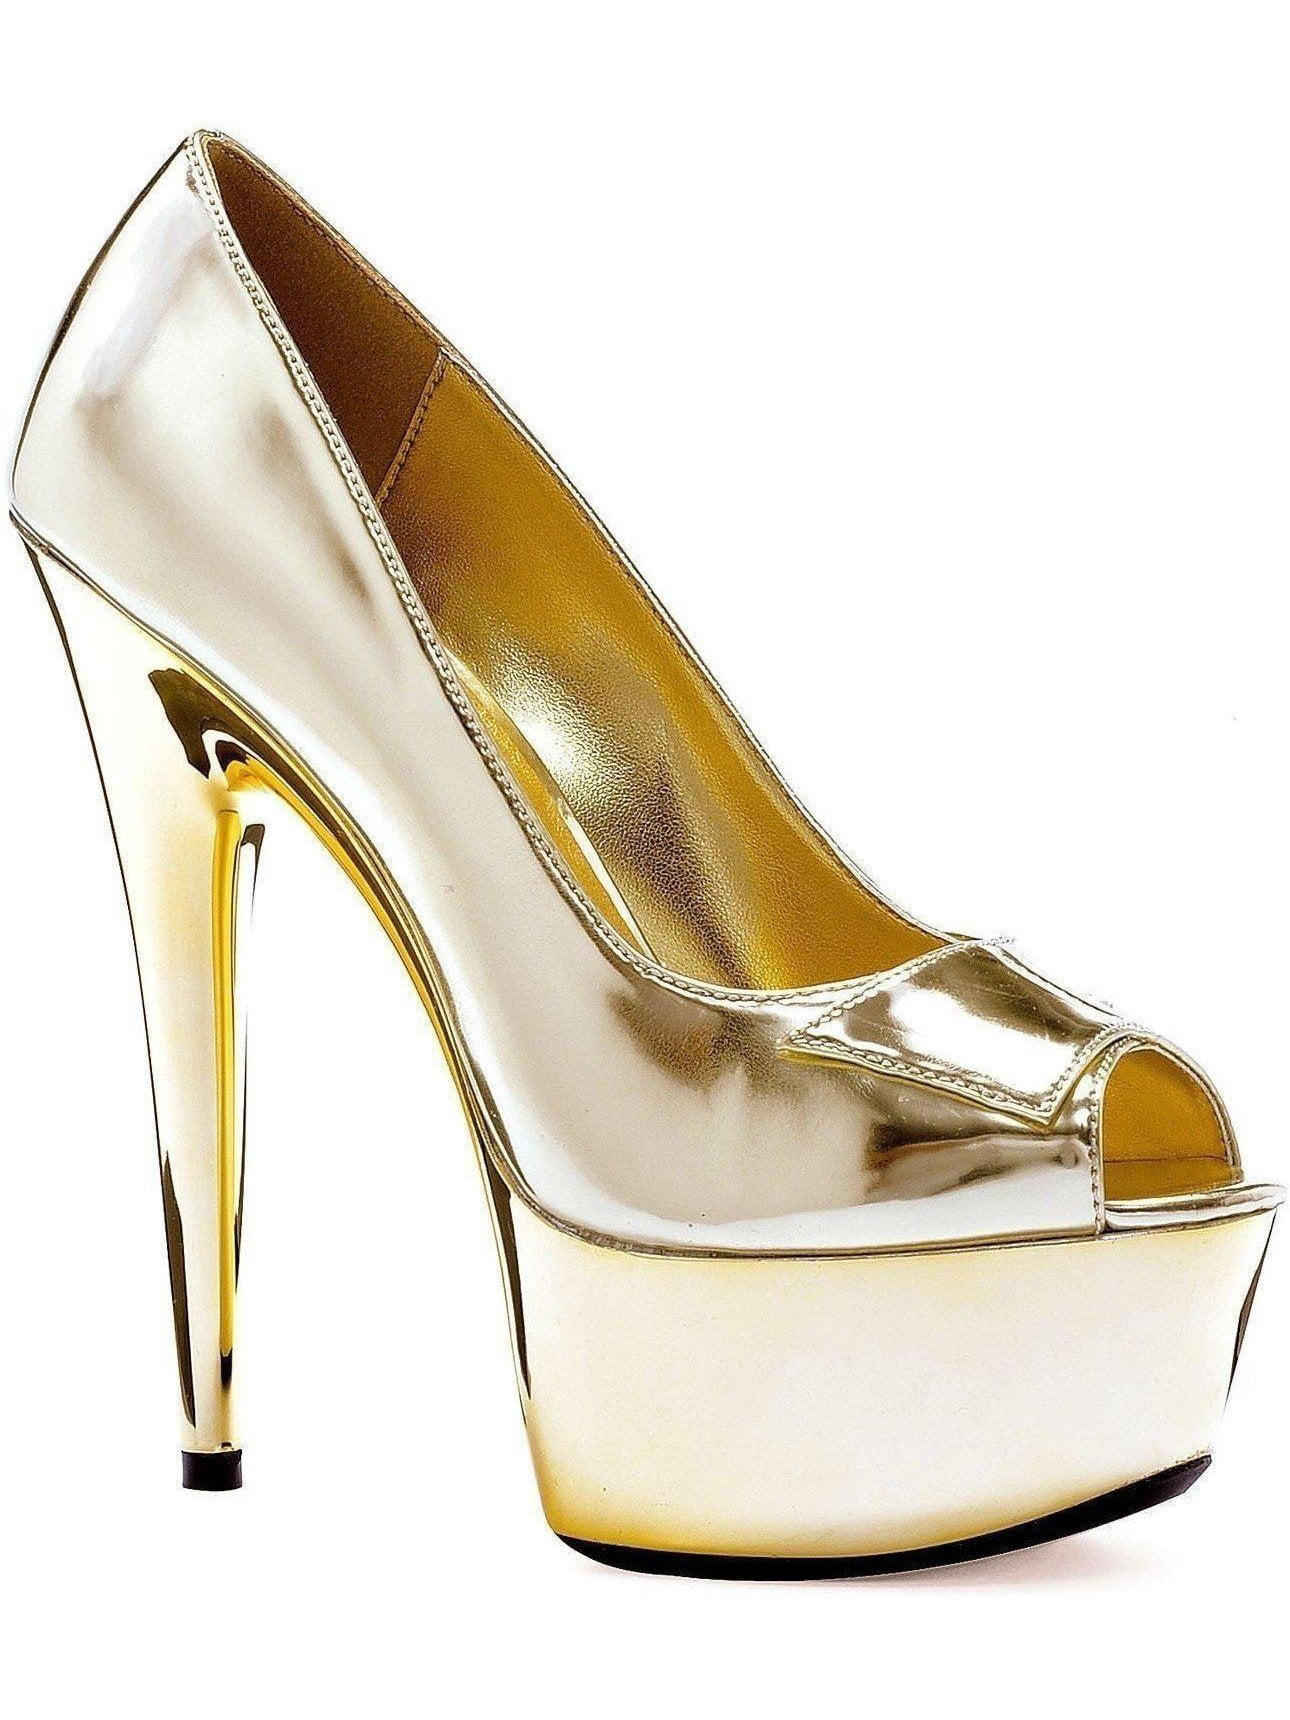 size 5 heels canada